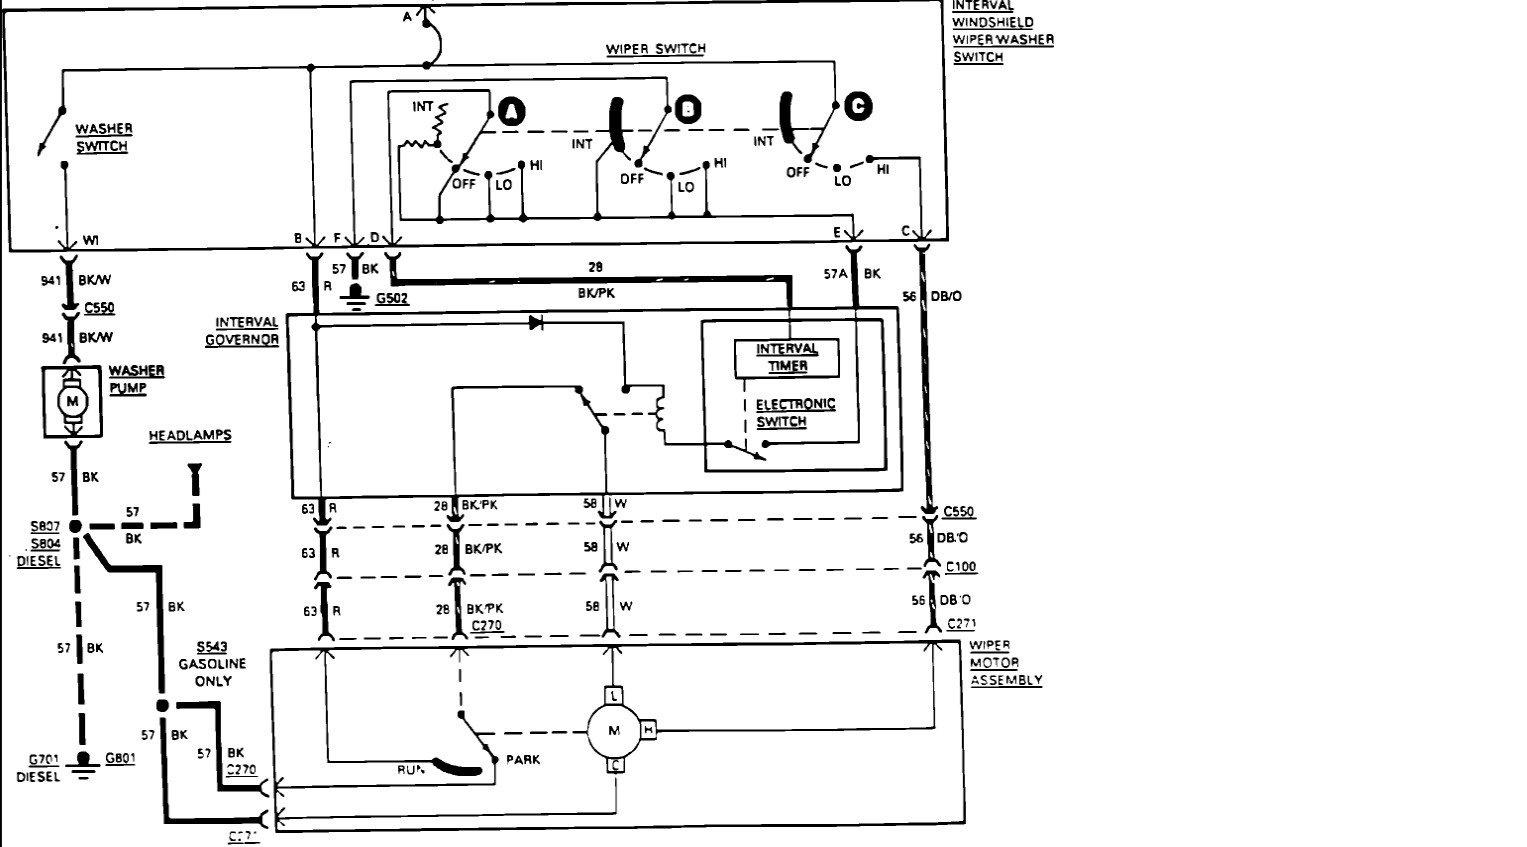 F150 Wiper Motor Wiring Diagram Wiring Diagrams 1991 Ford F350 Wiring Diagram 1991 Ford F 150 Wiring Diagram